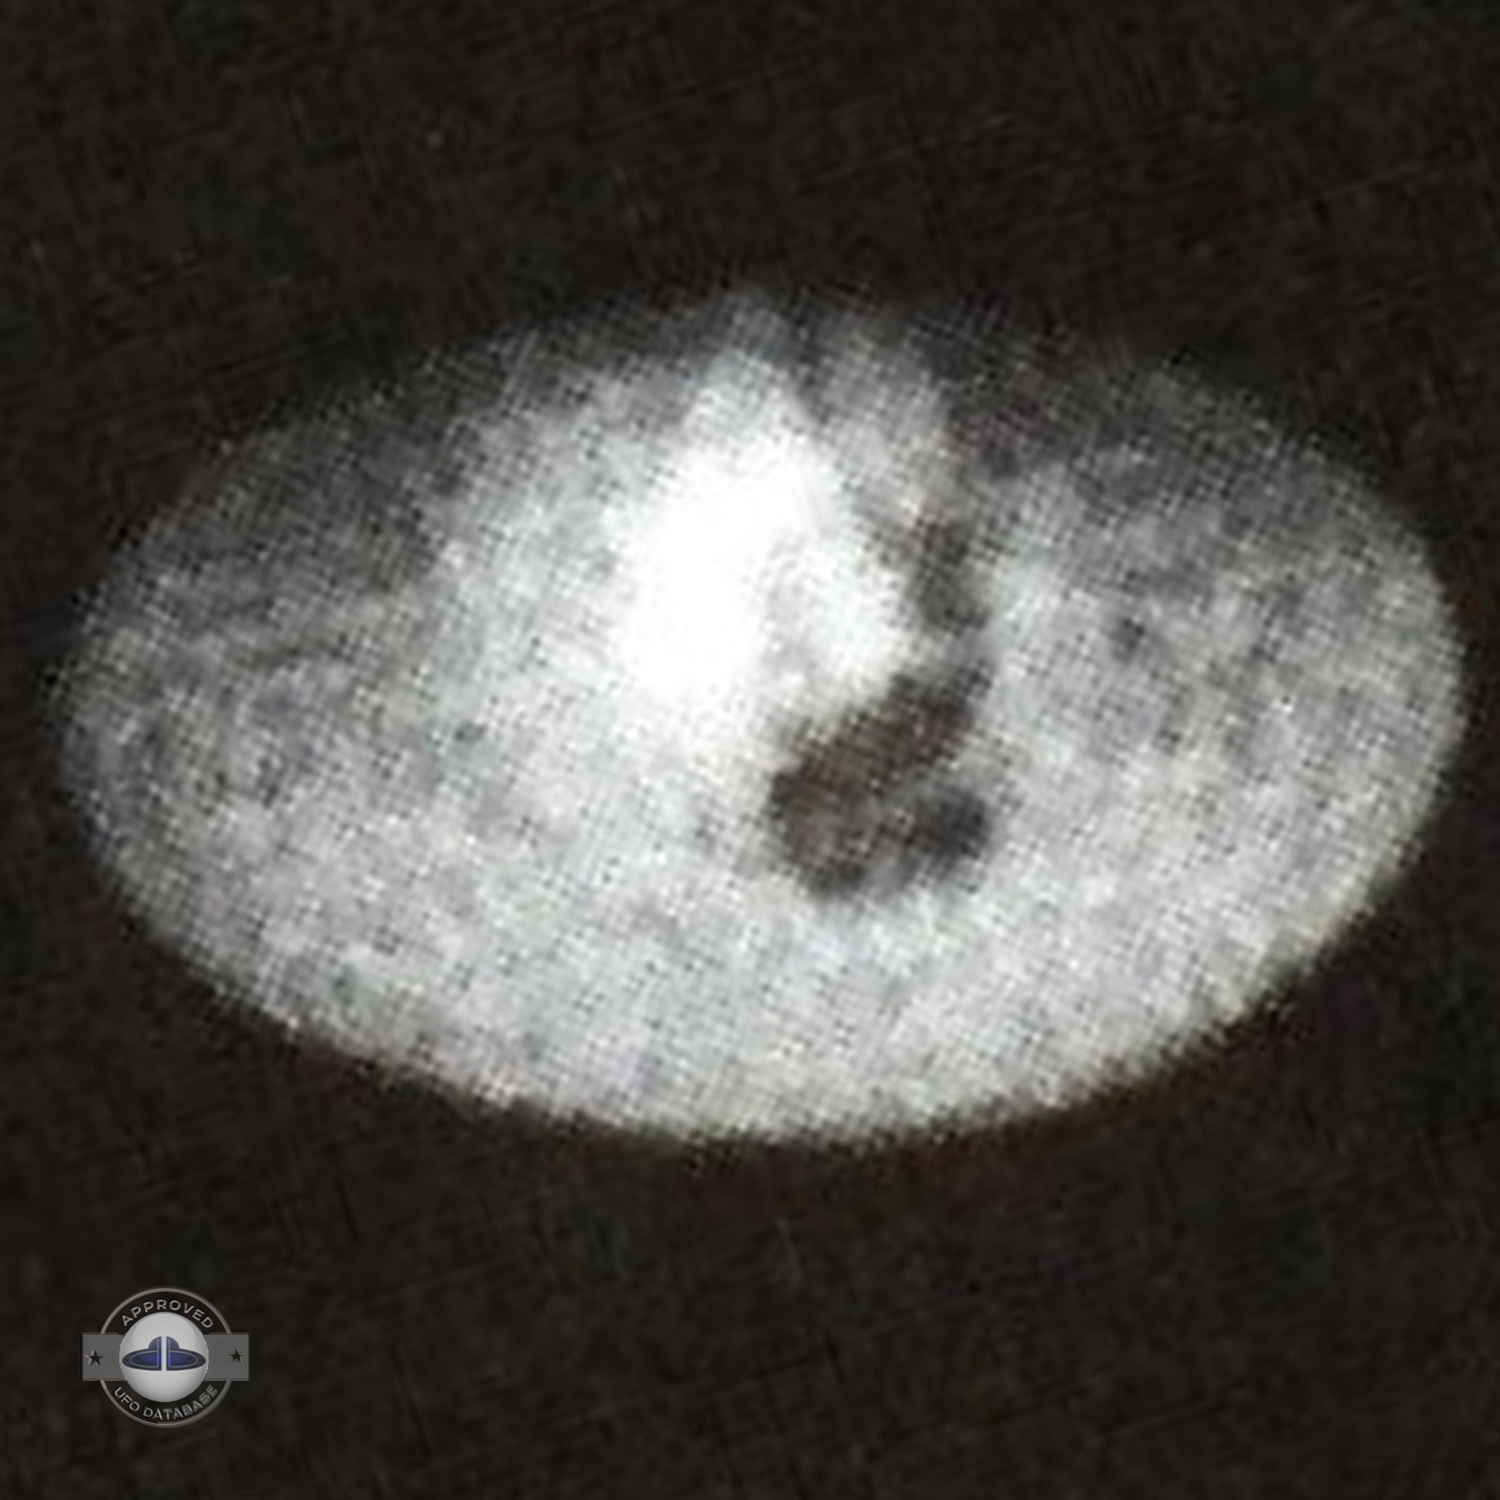 Yaroslavl, Russia | UFO with Saturn Shape | April 1990 | UFO picture UFO Picture #171-4